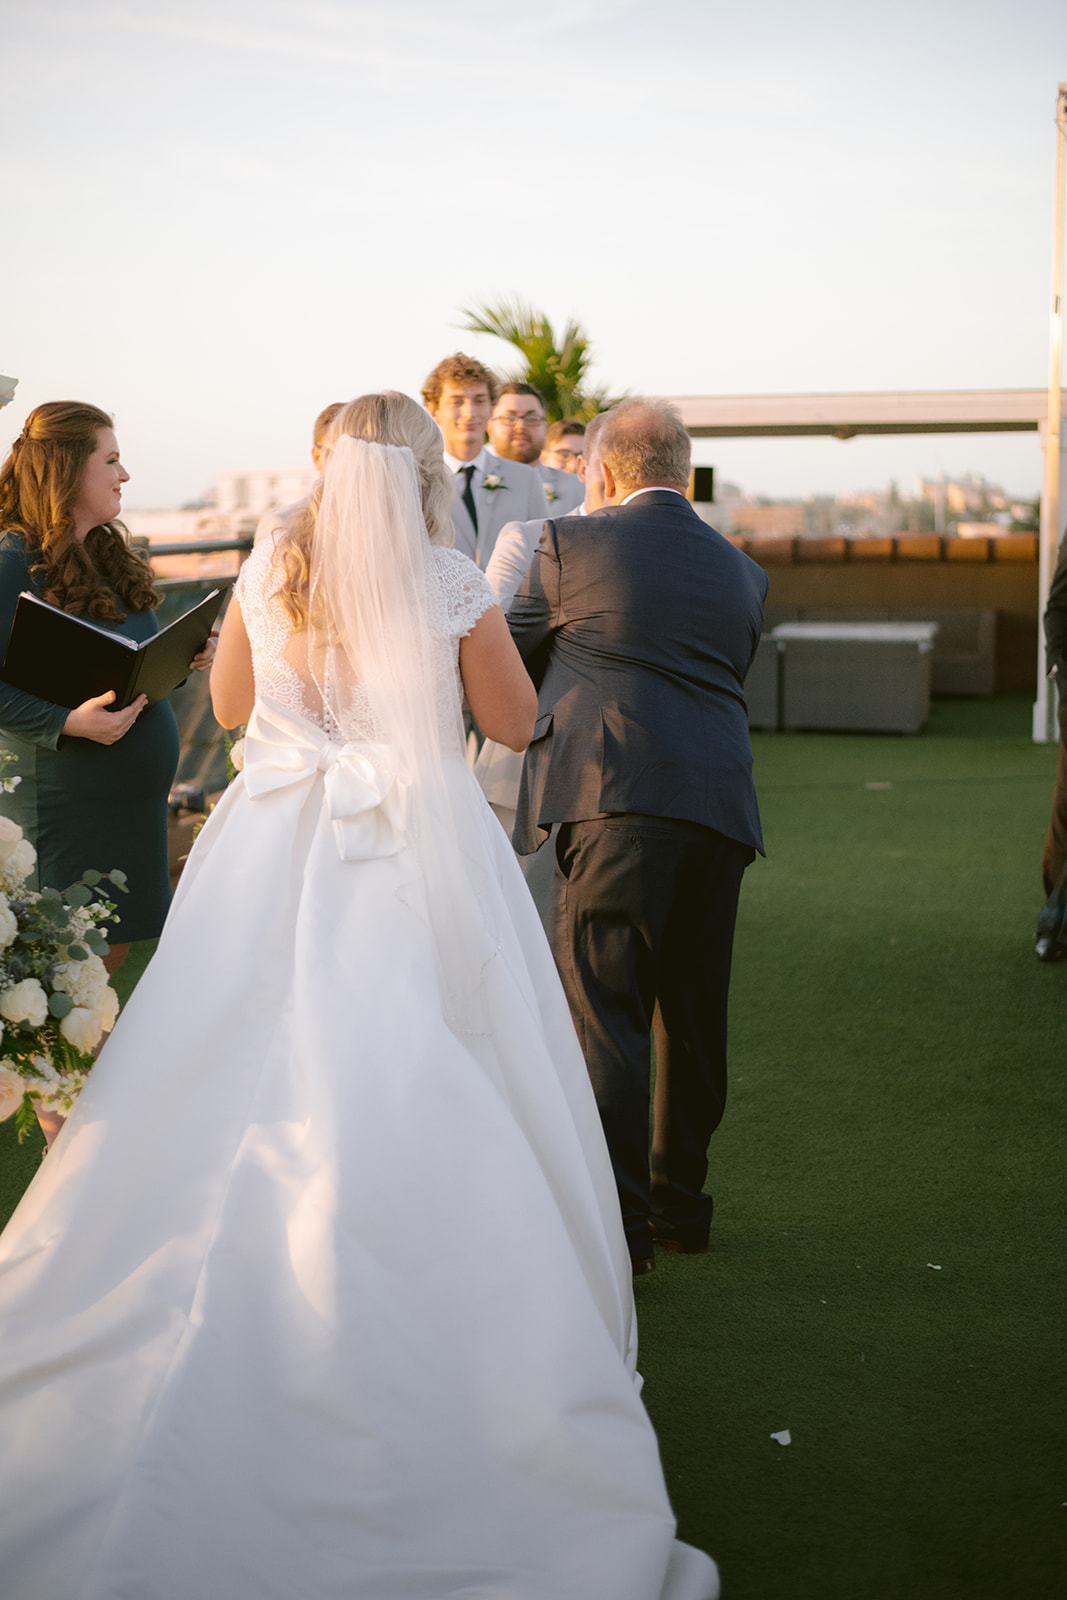 Hotel Zamora Wedding: Bride and Groom's Walk on the Beach
